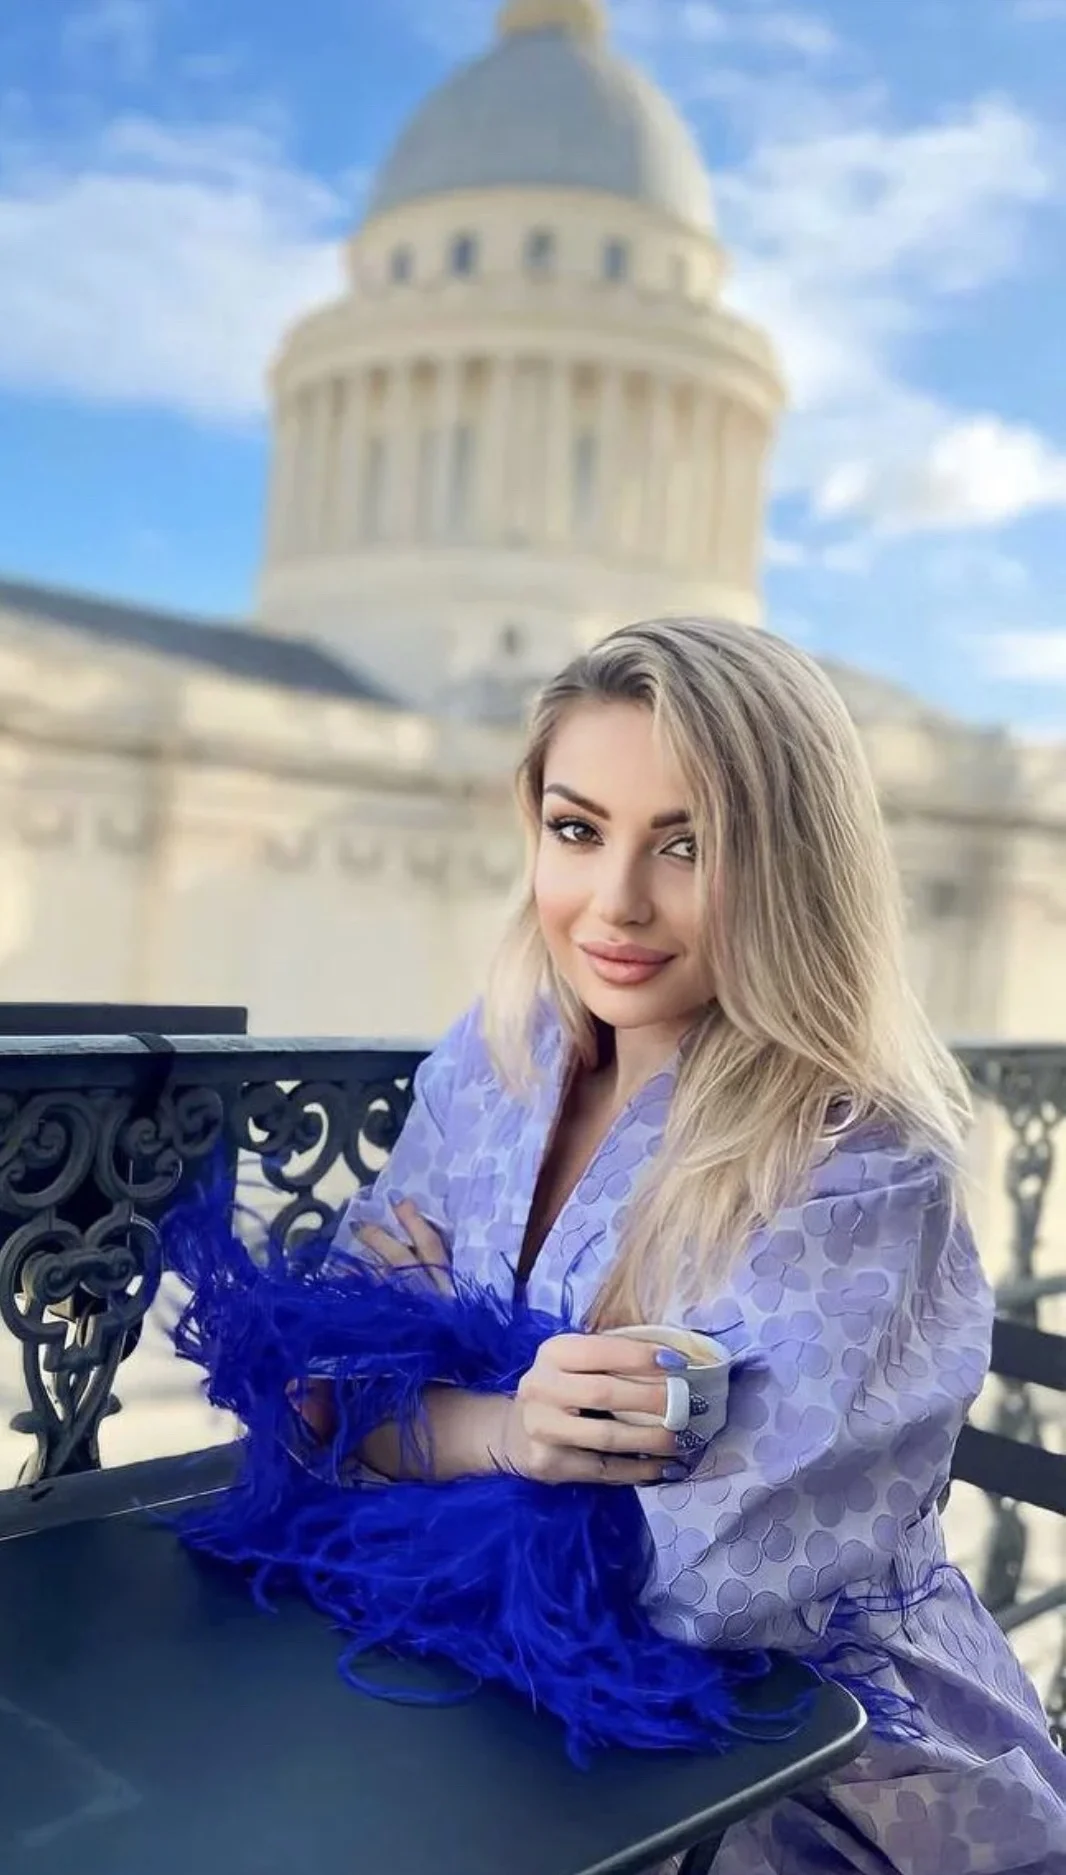 Maria russian online dating app